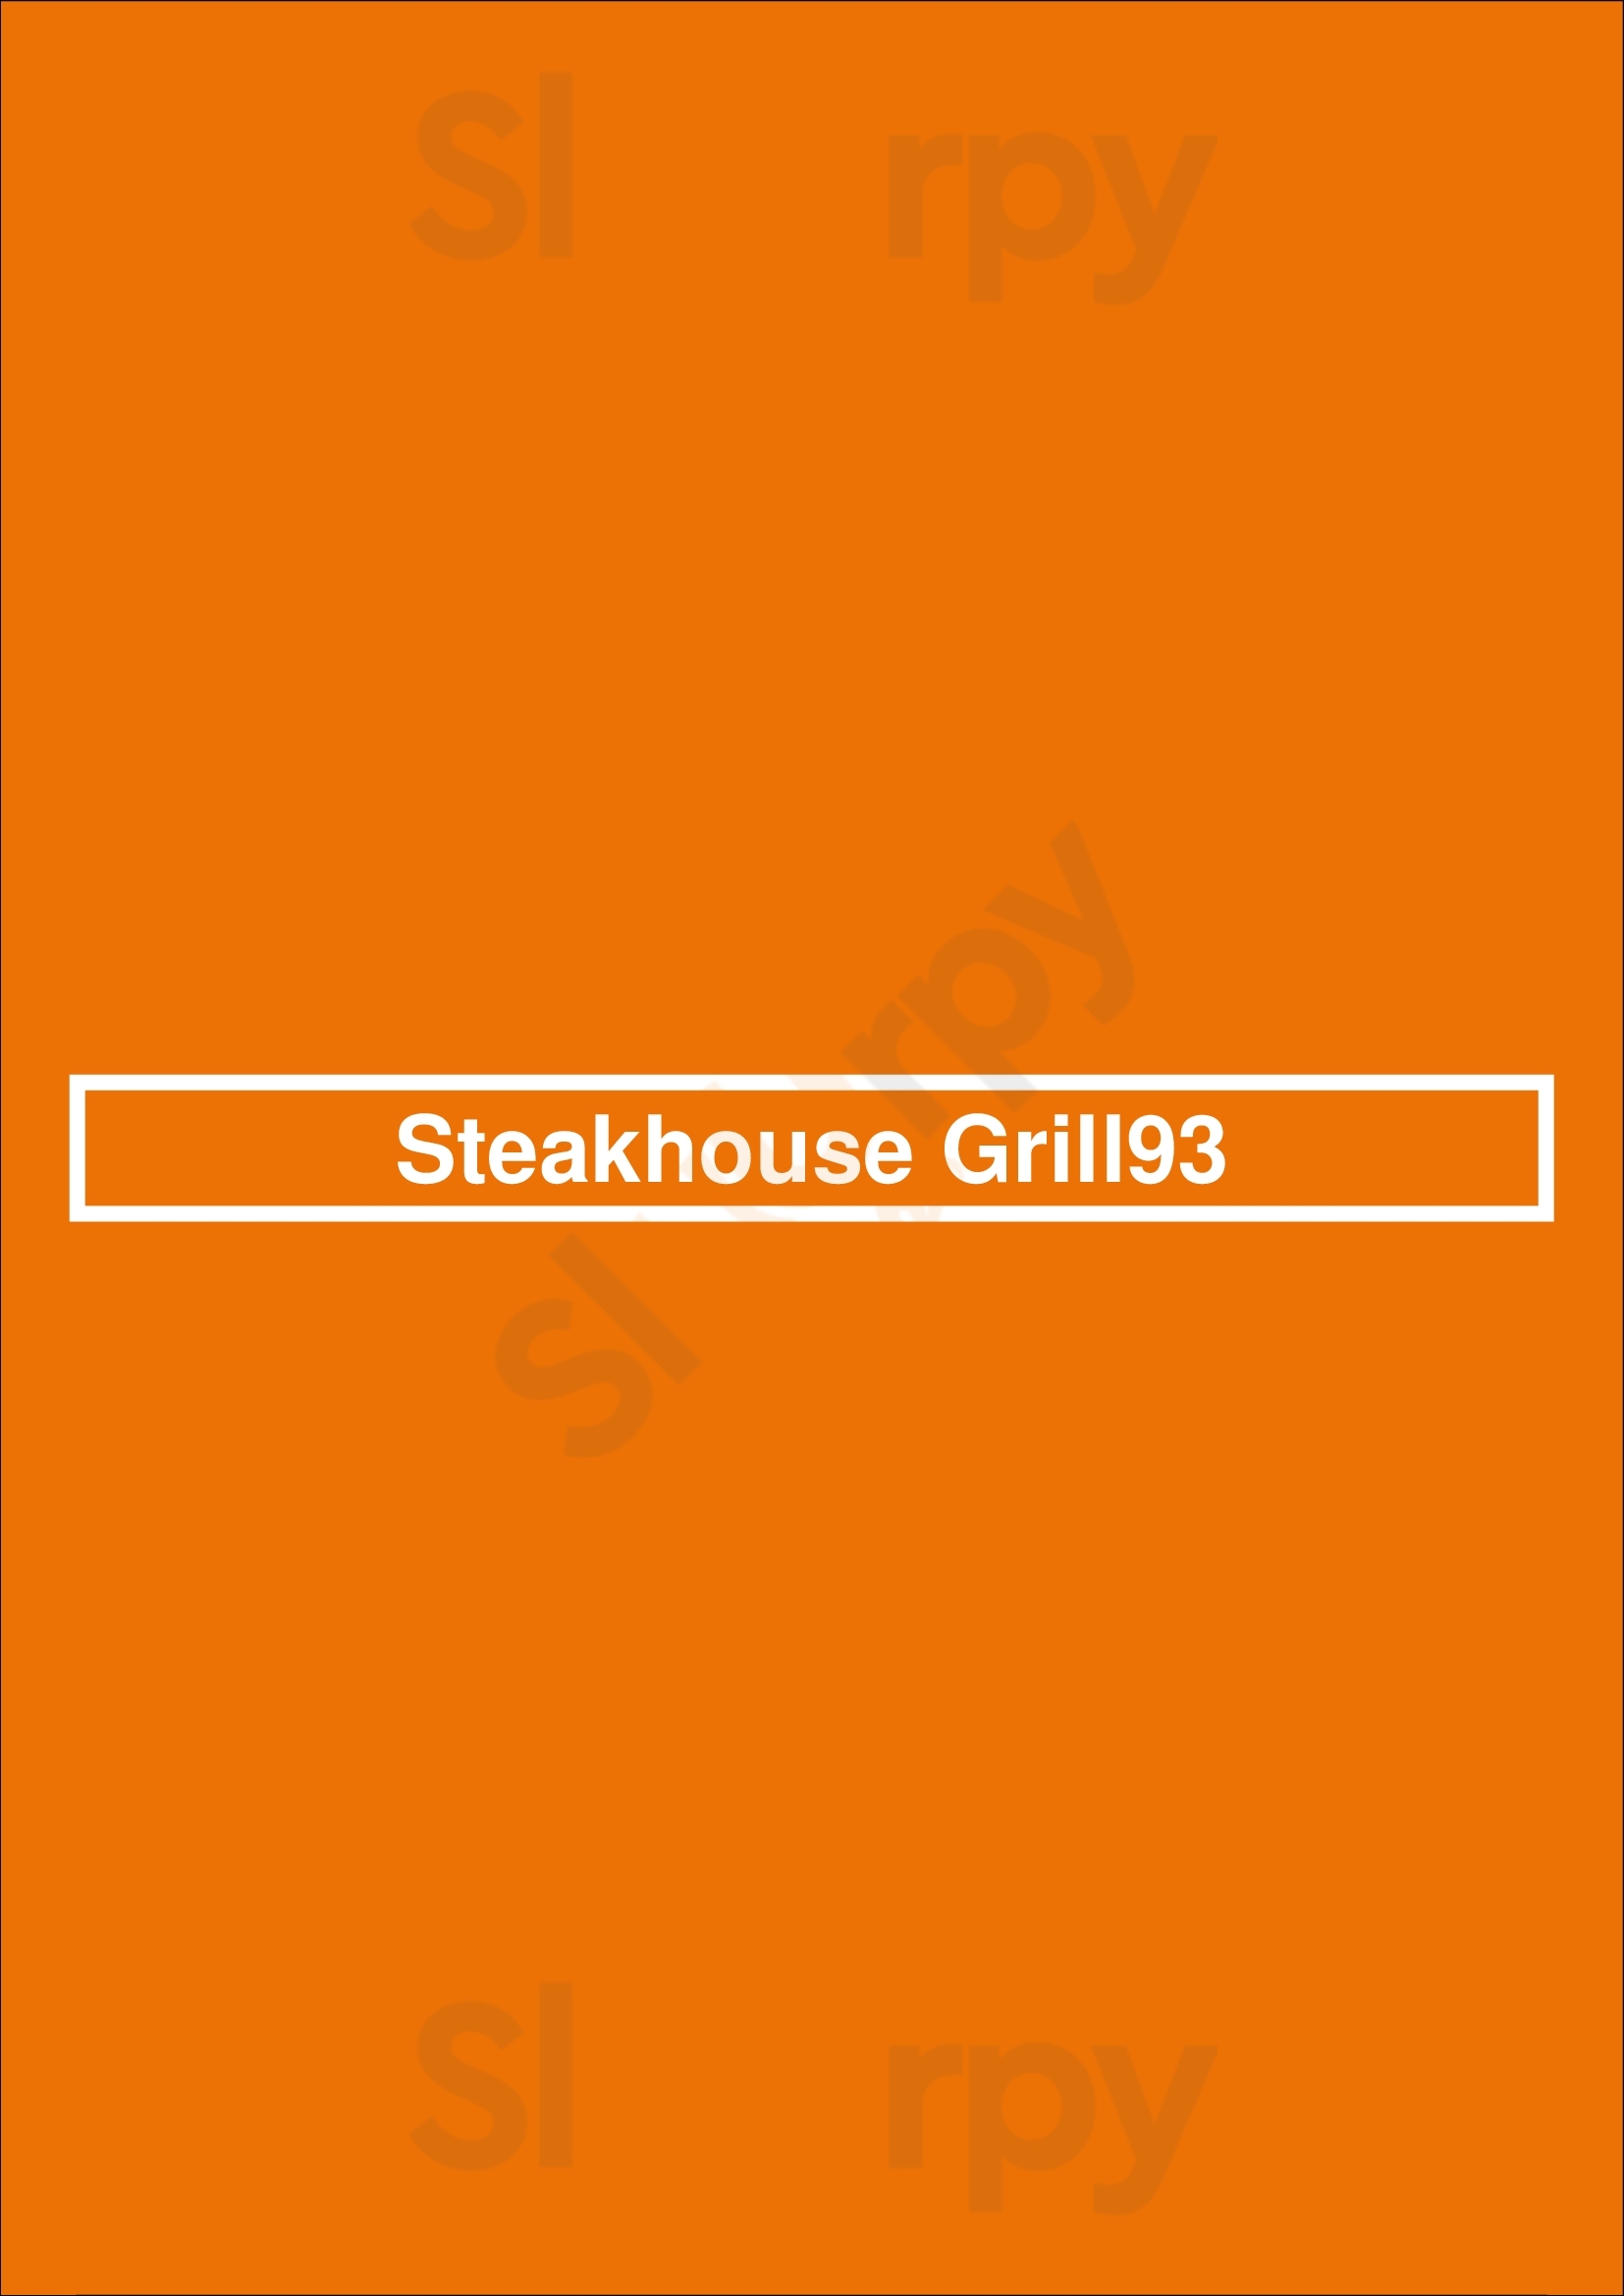 Steakhouse Grill93 München Menu - 1